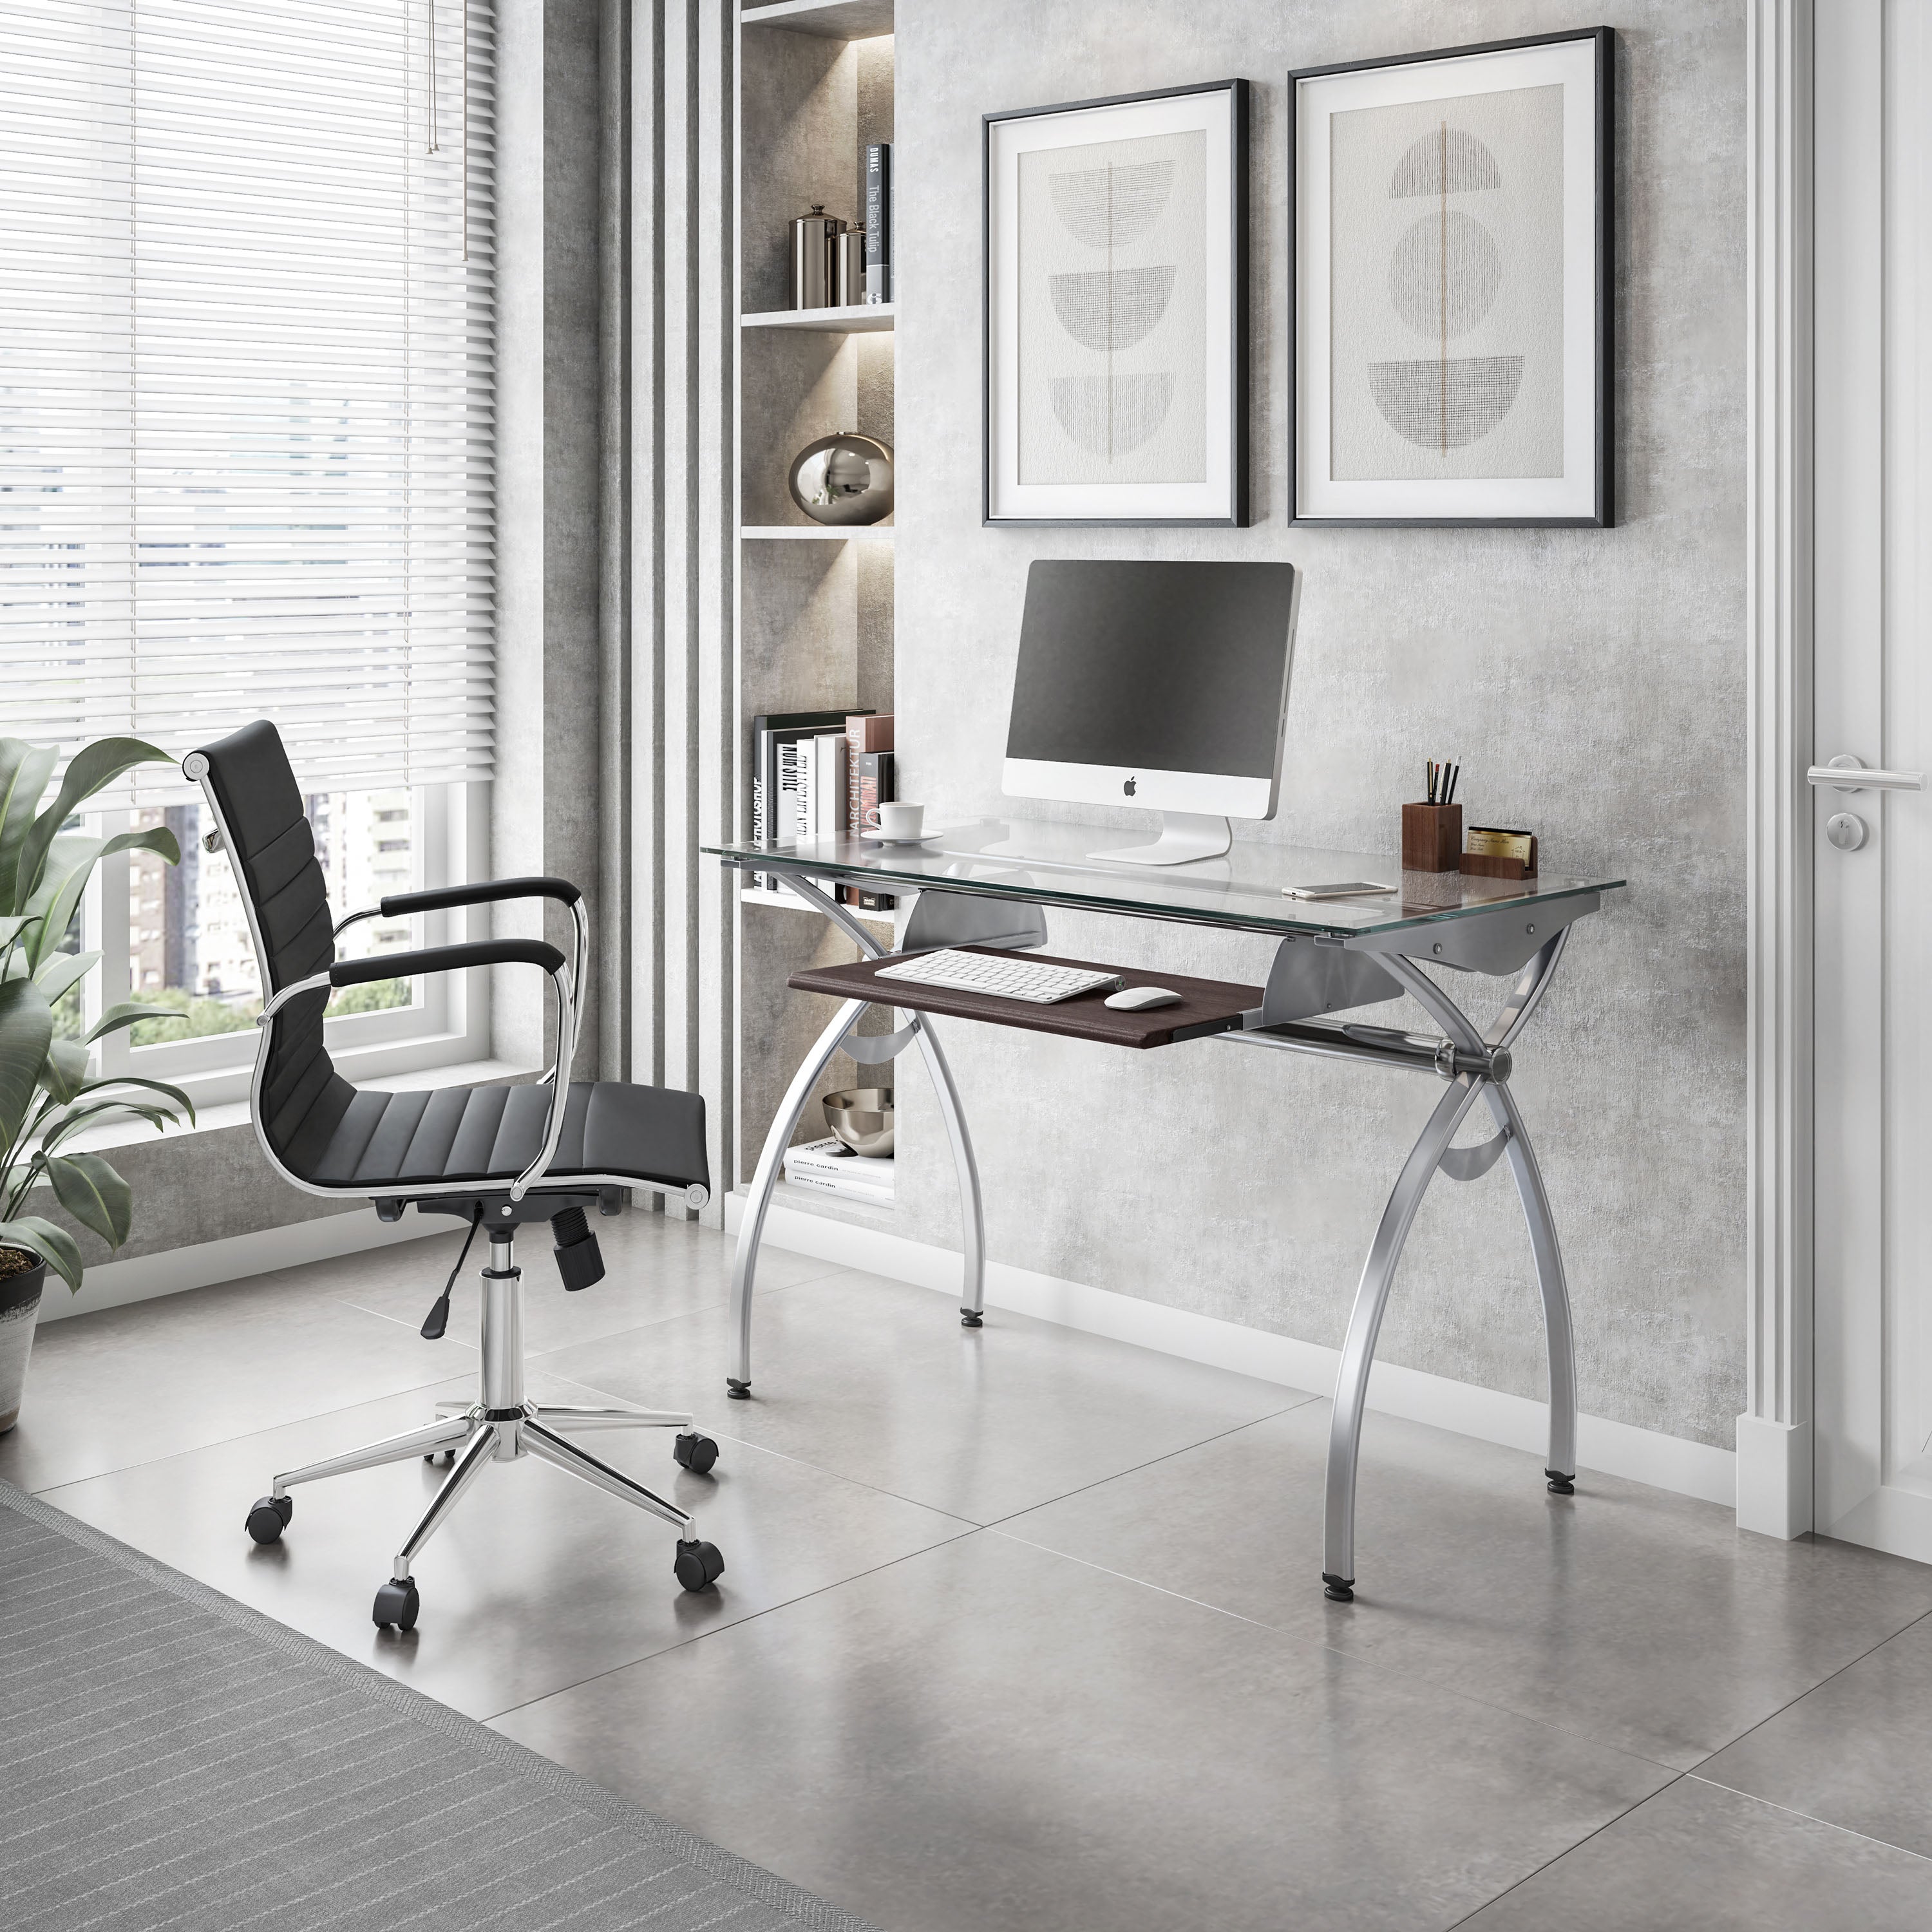 Office Depot Furniture: Computer Desks, Office Chairs, Standing